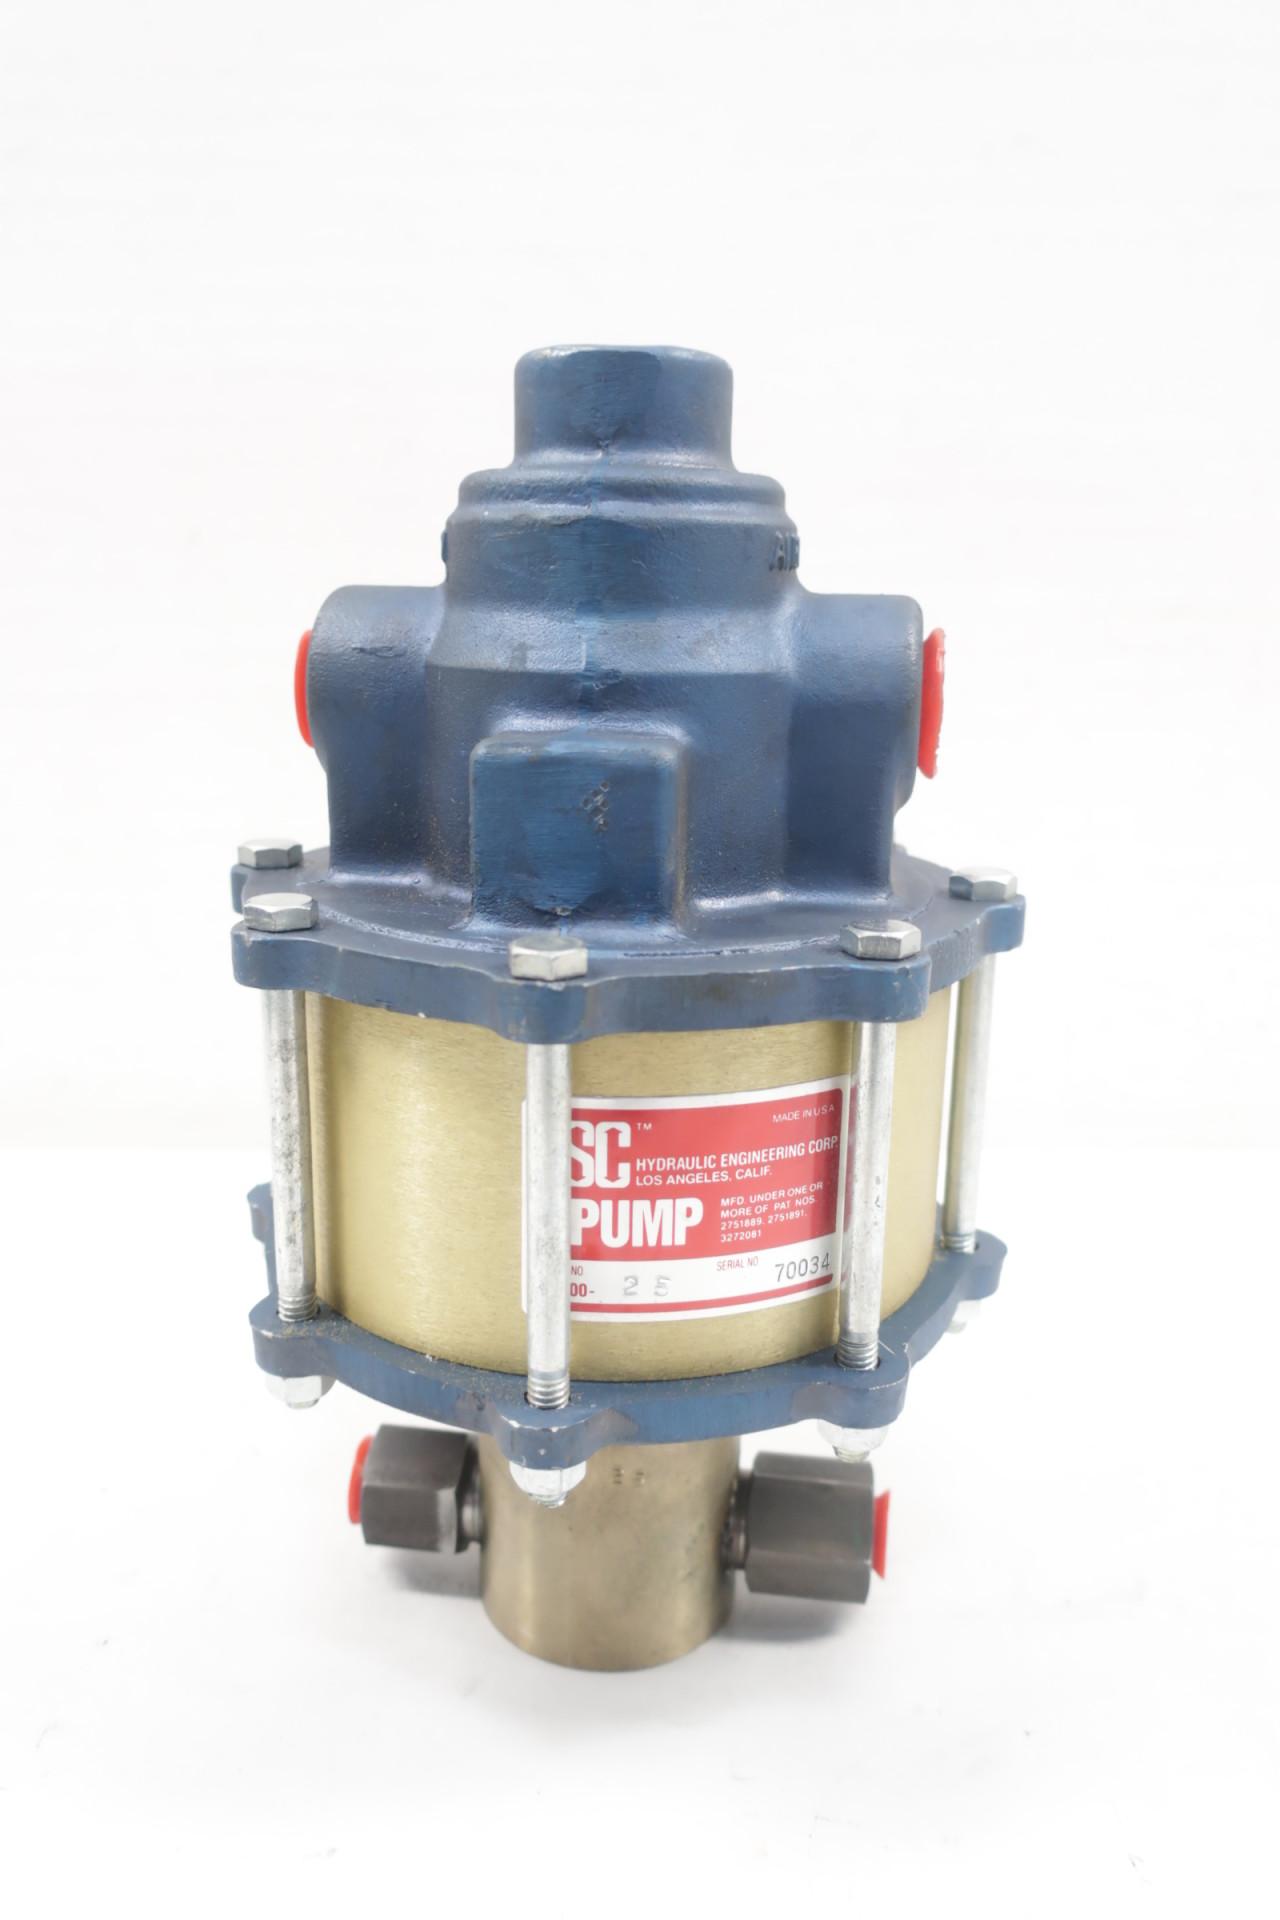 SC Pump Air Driven Hydraulic Pump Model 10-500 * 